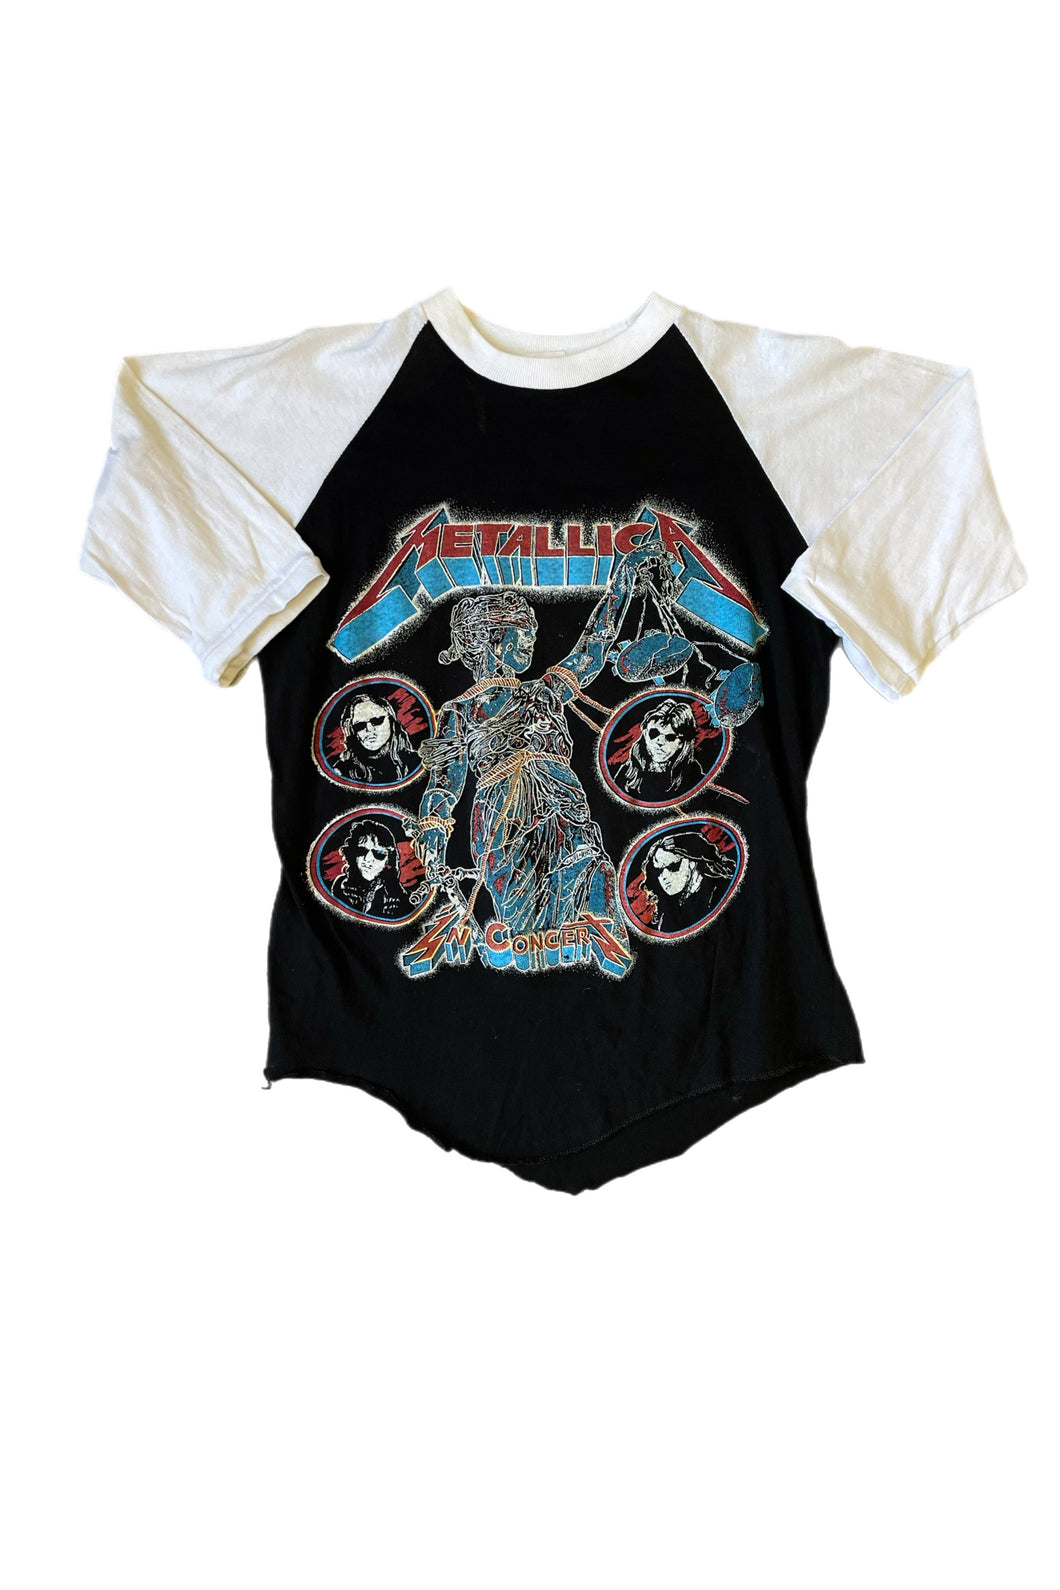 Vintage 1980's Metallica Tour T-Shirt